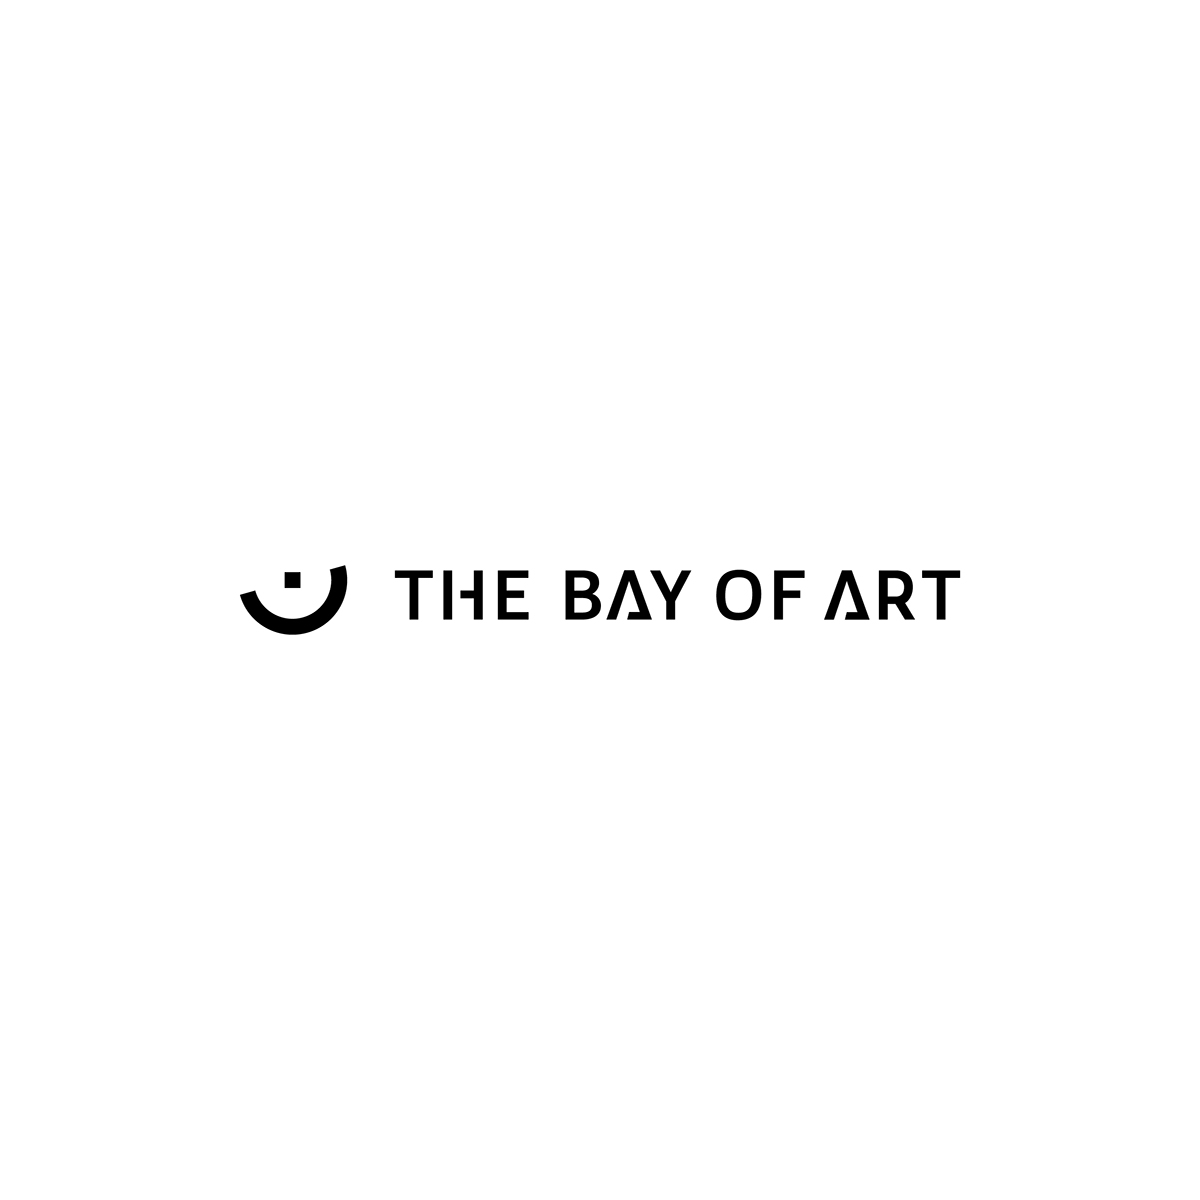 mcka zatoka sztuki the bay of art logo visual identity Corporate Identity